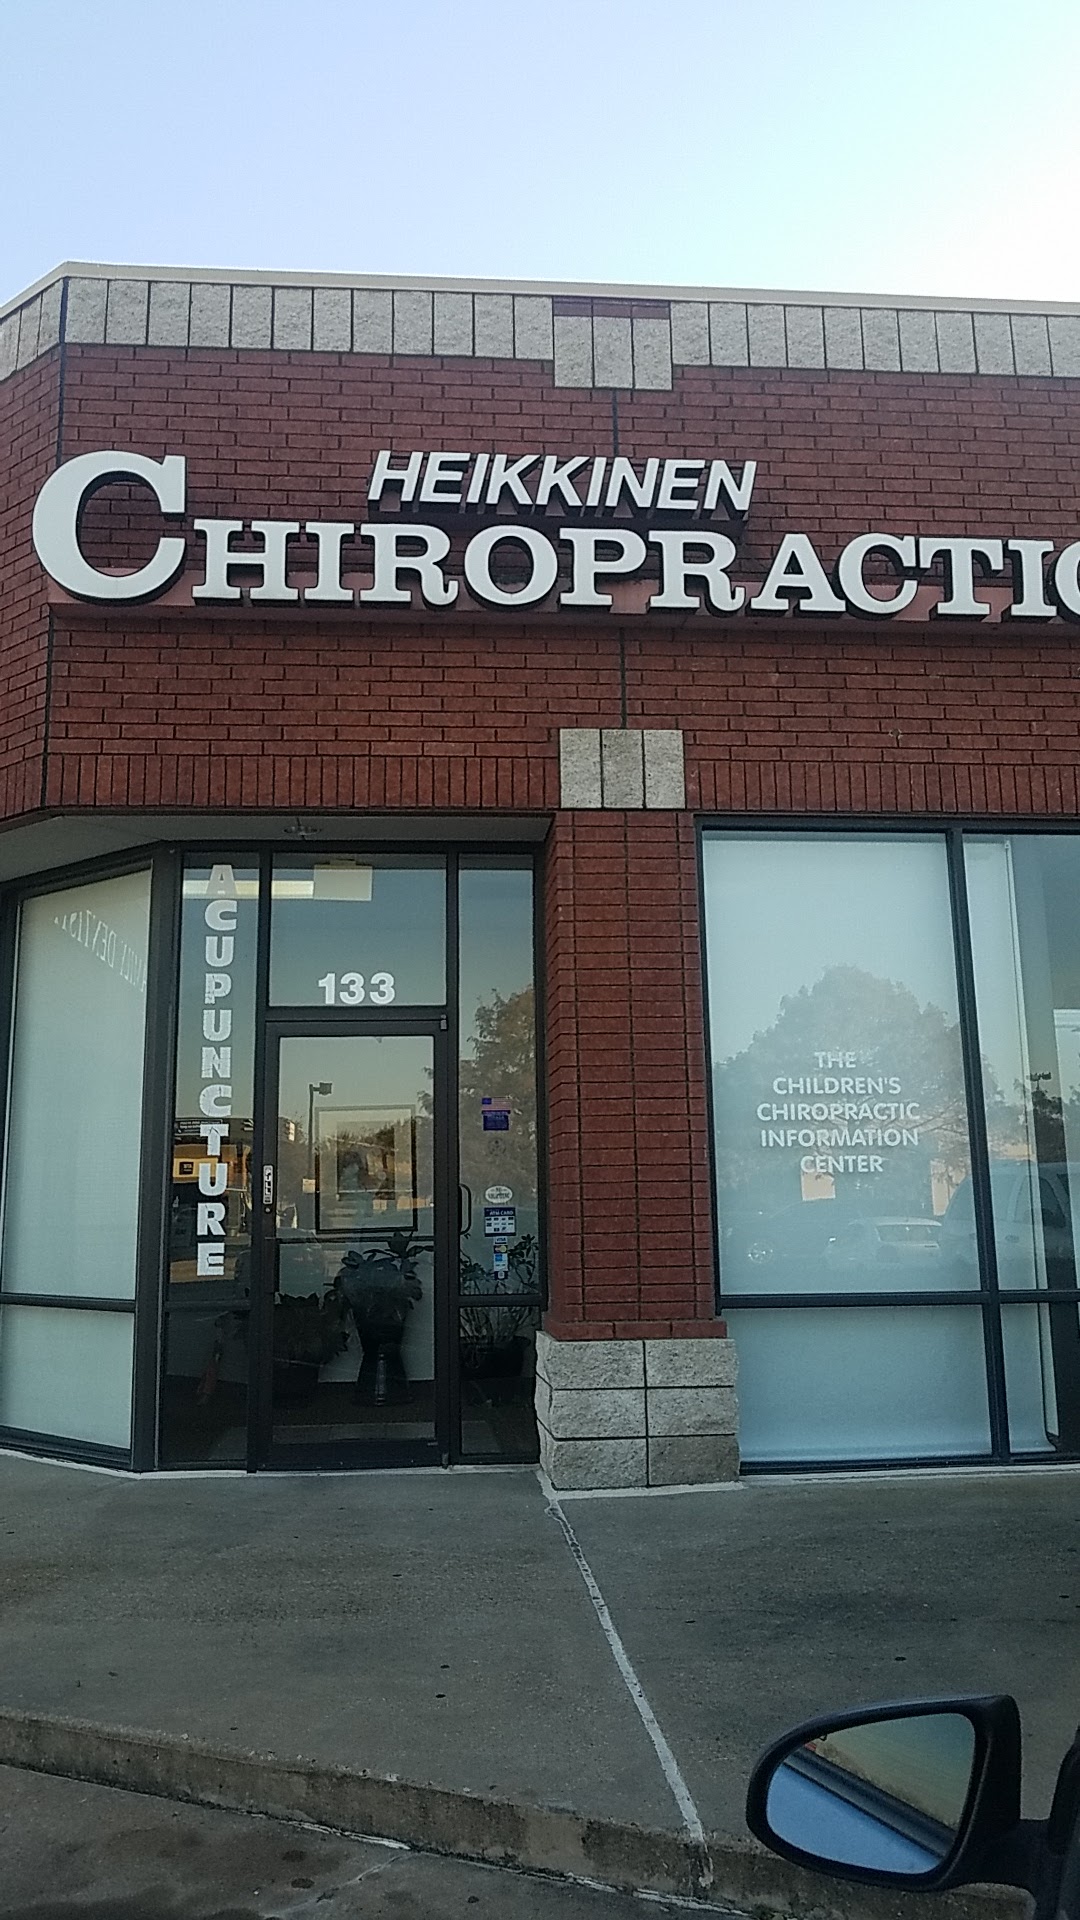 Heikkinen Chiropractic and Acupuncture Center